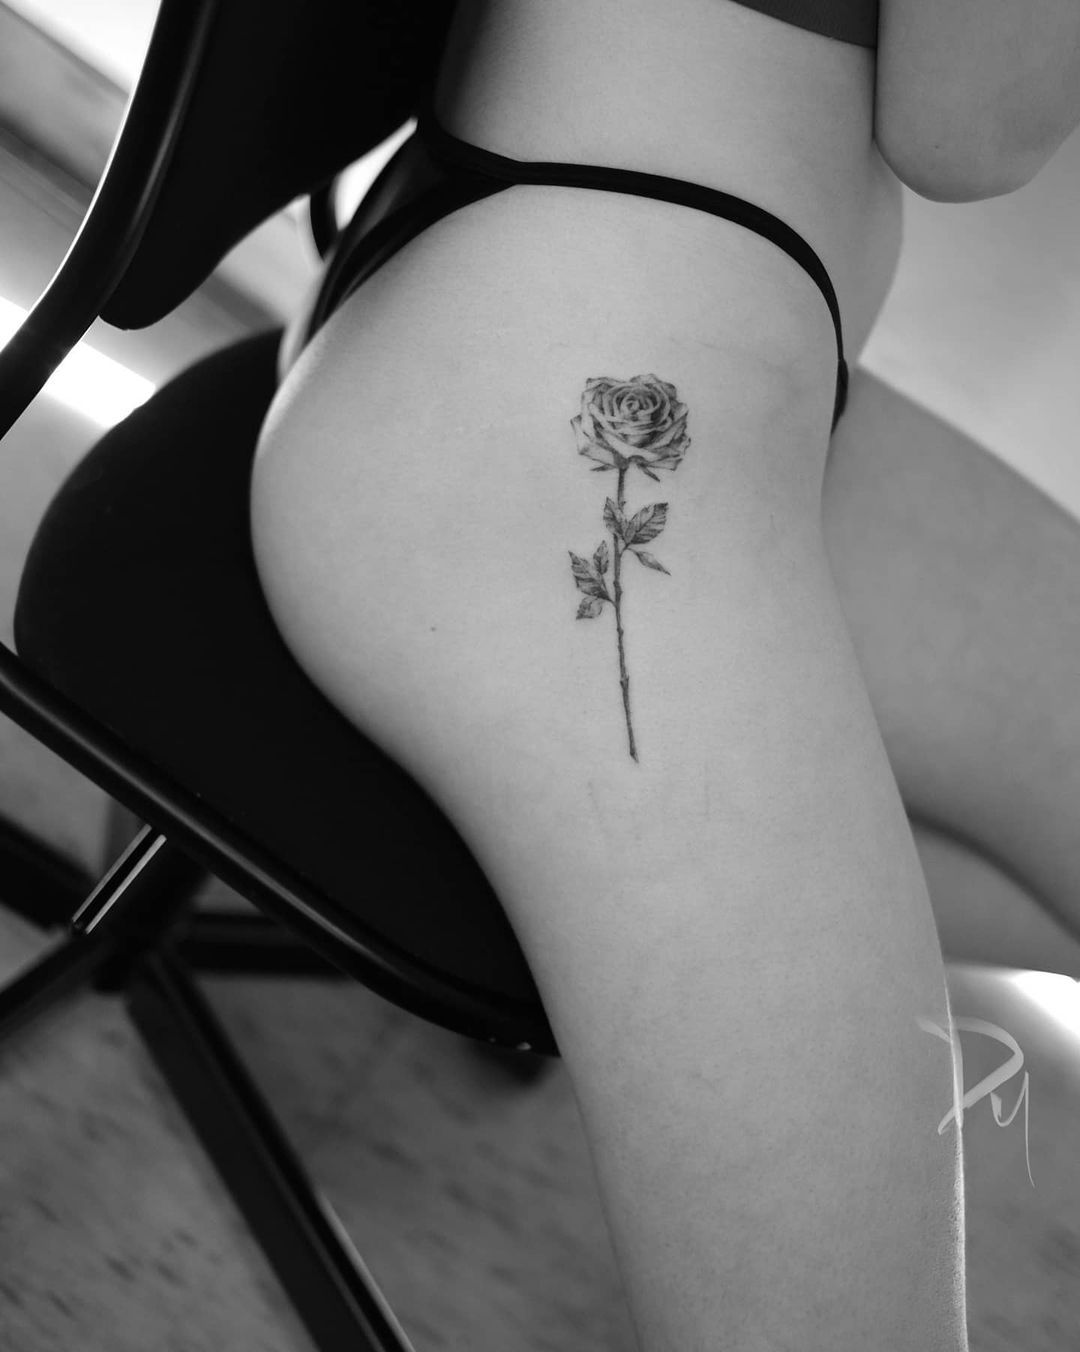 Detailed rosehip tattoo - Tattoogrid.net